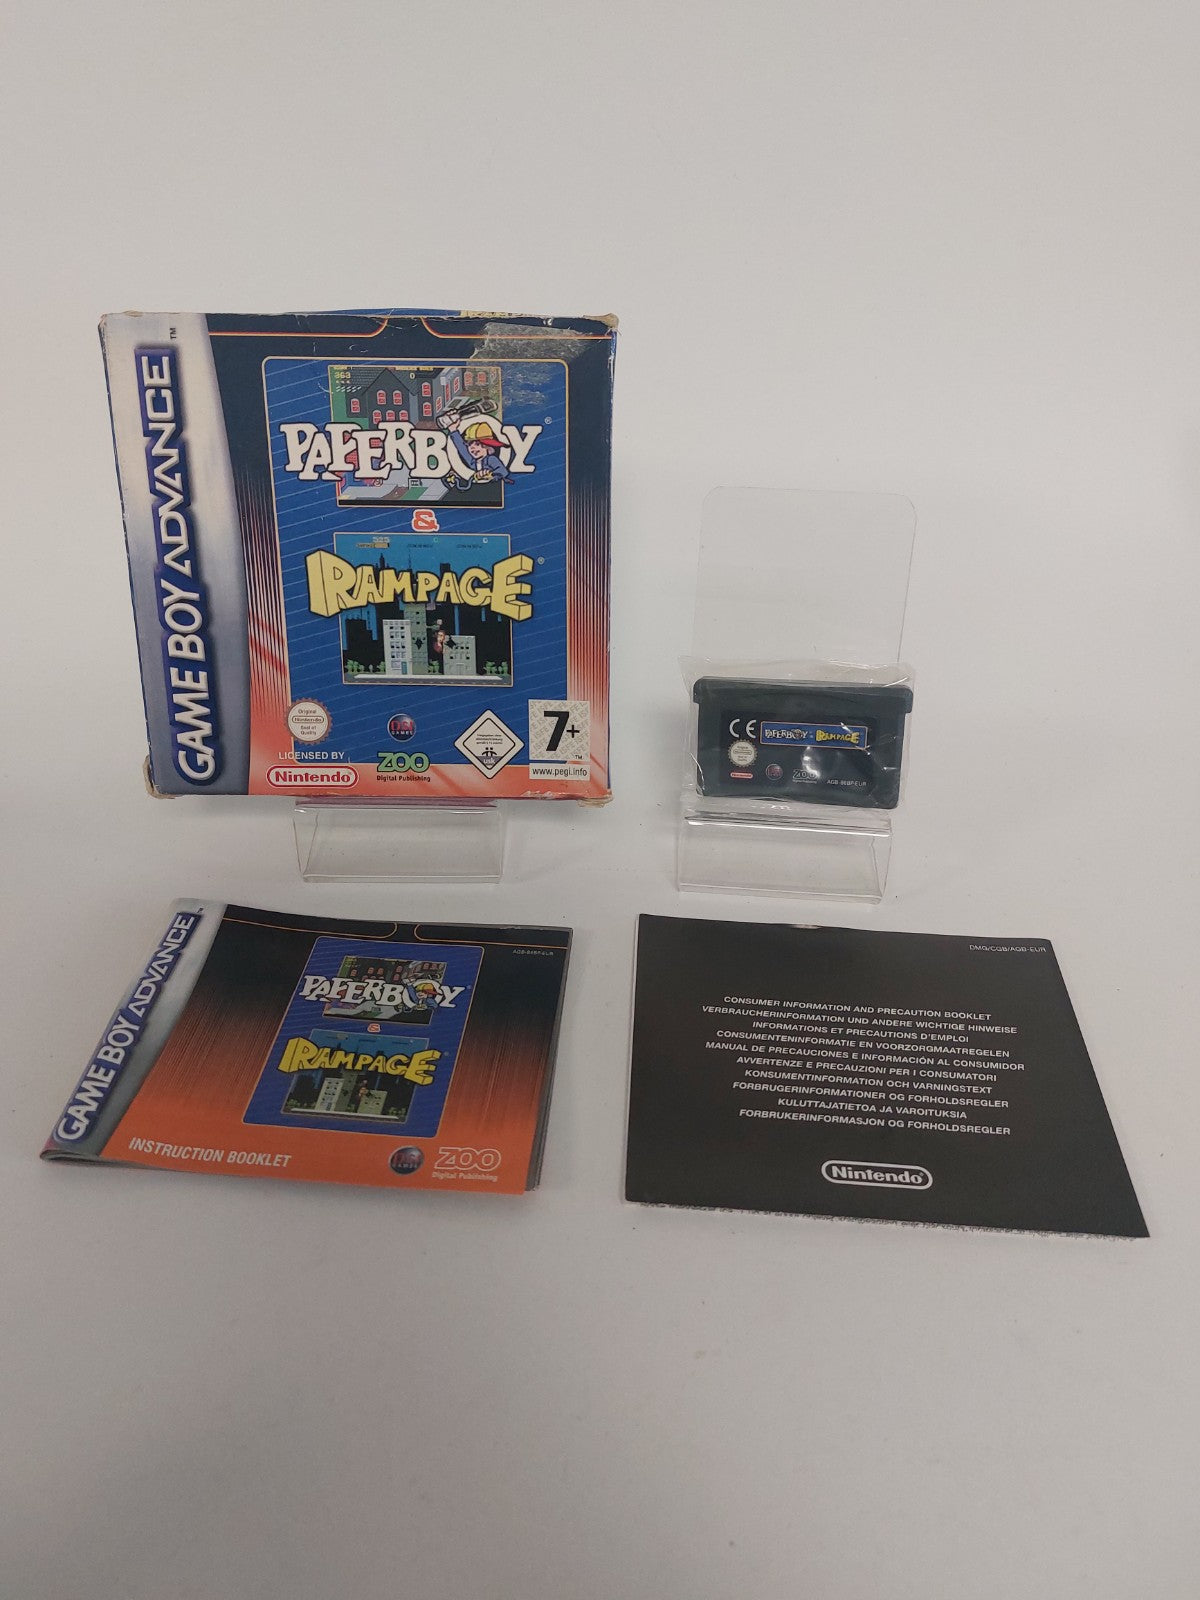 Paperboy &amp; Rampage Schließe Game Boy Advance ab